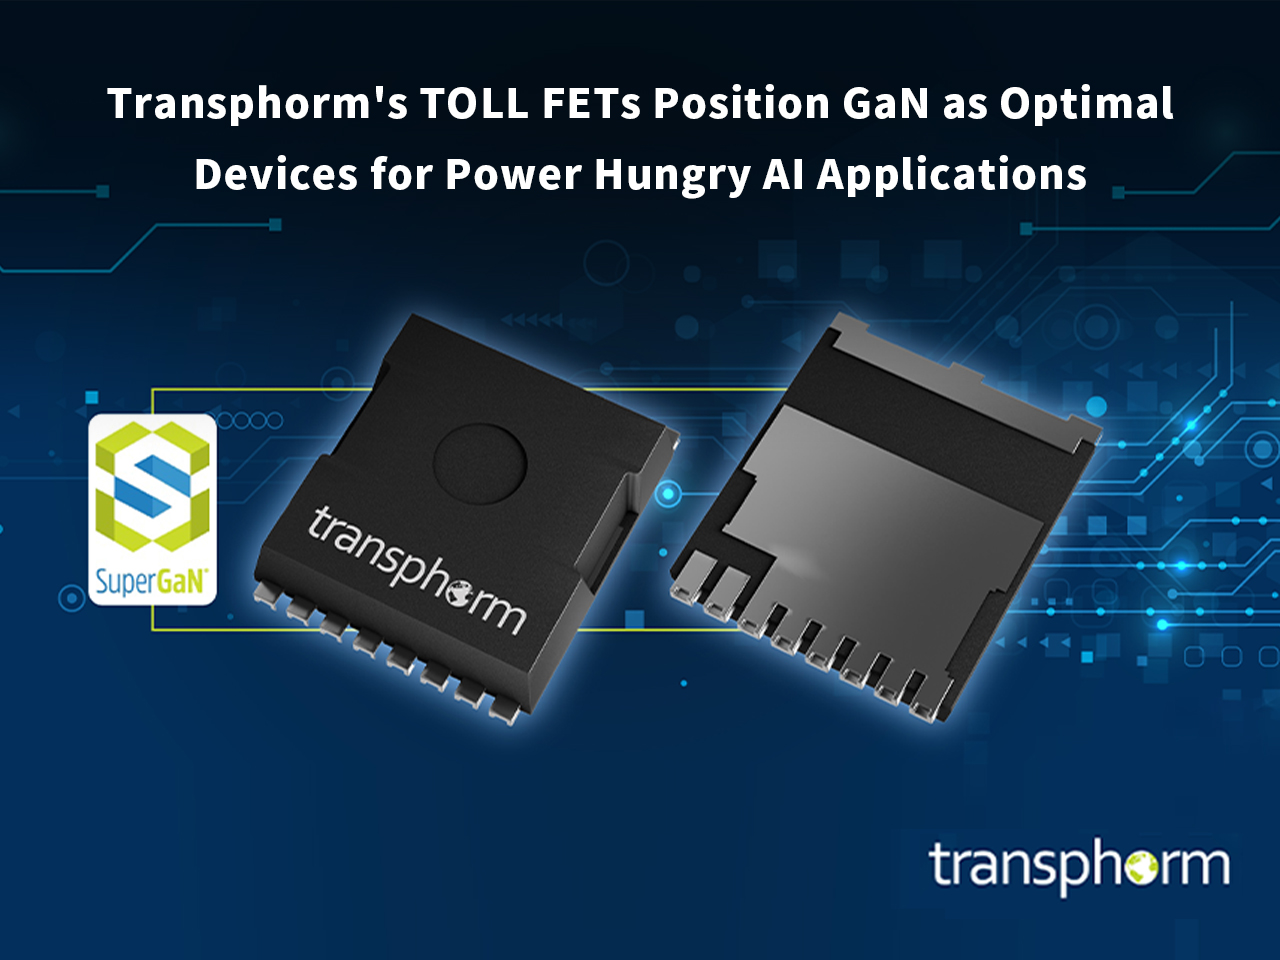 Transphorm推出TOLL封装FET，将氮化镓定位为支持高功率能耗人工智能应用的最佳器件